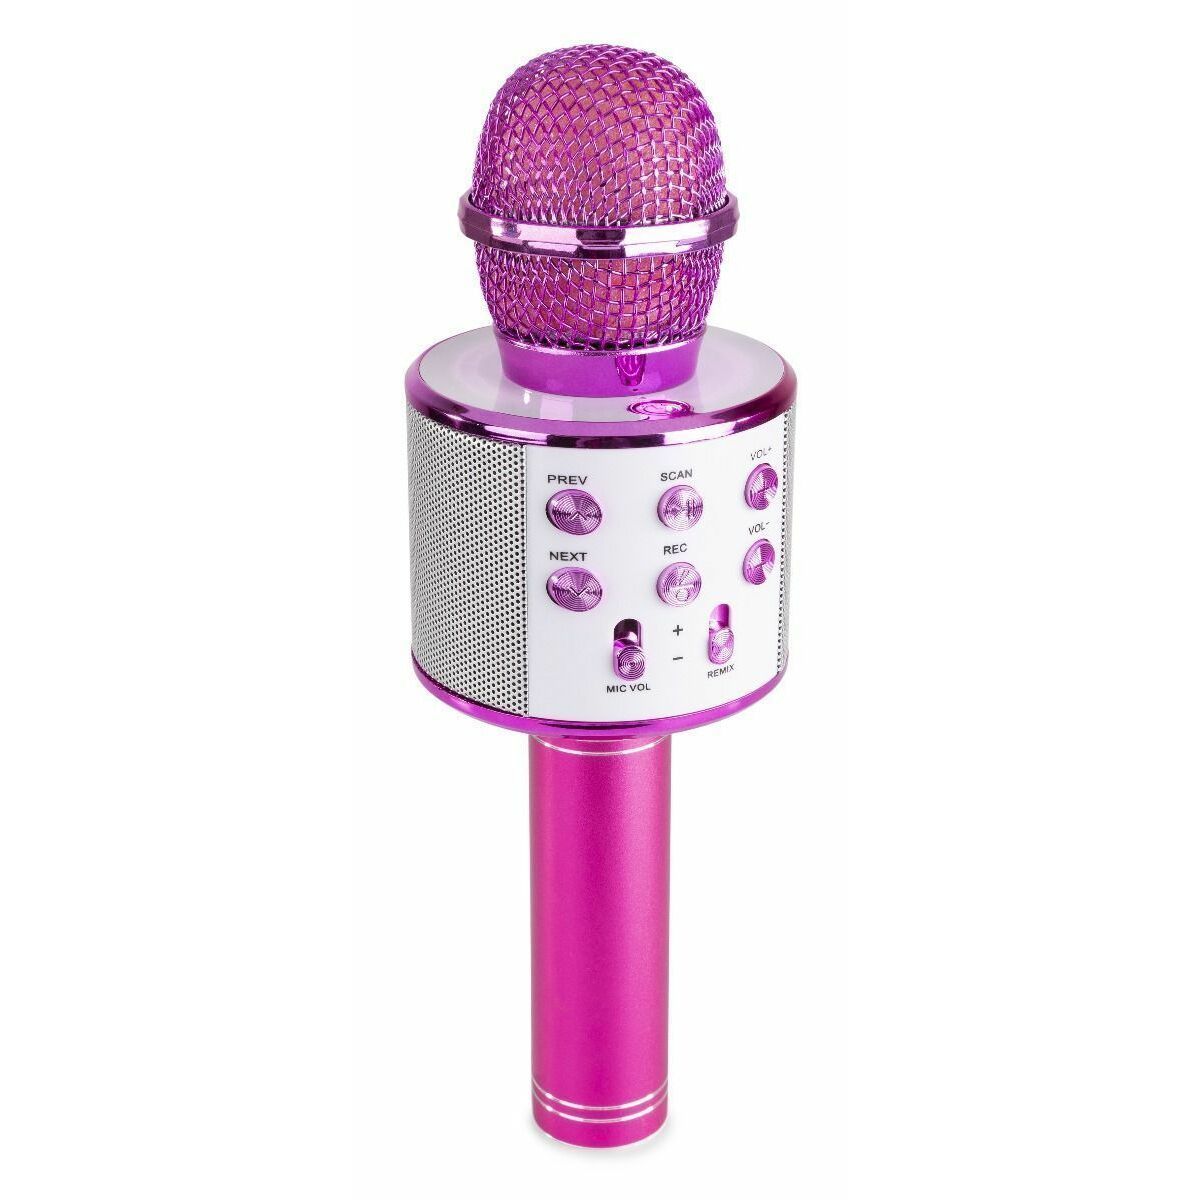 Overweldigen volume Genealogie MAX KM01 Karaoke microfoon met speaker, Bluetooth & mp3 - Roze kopen?